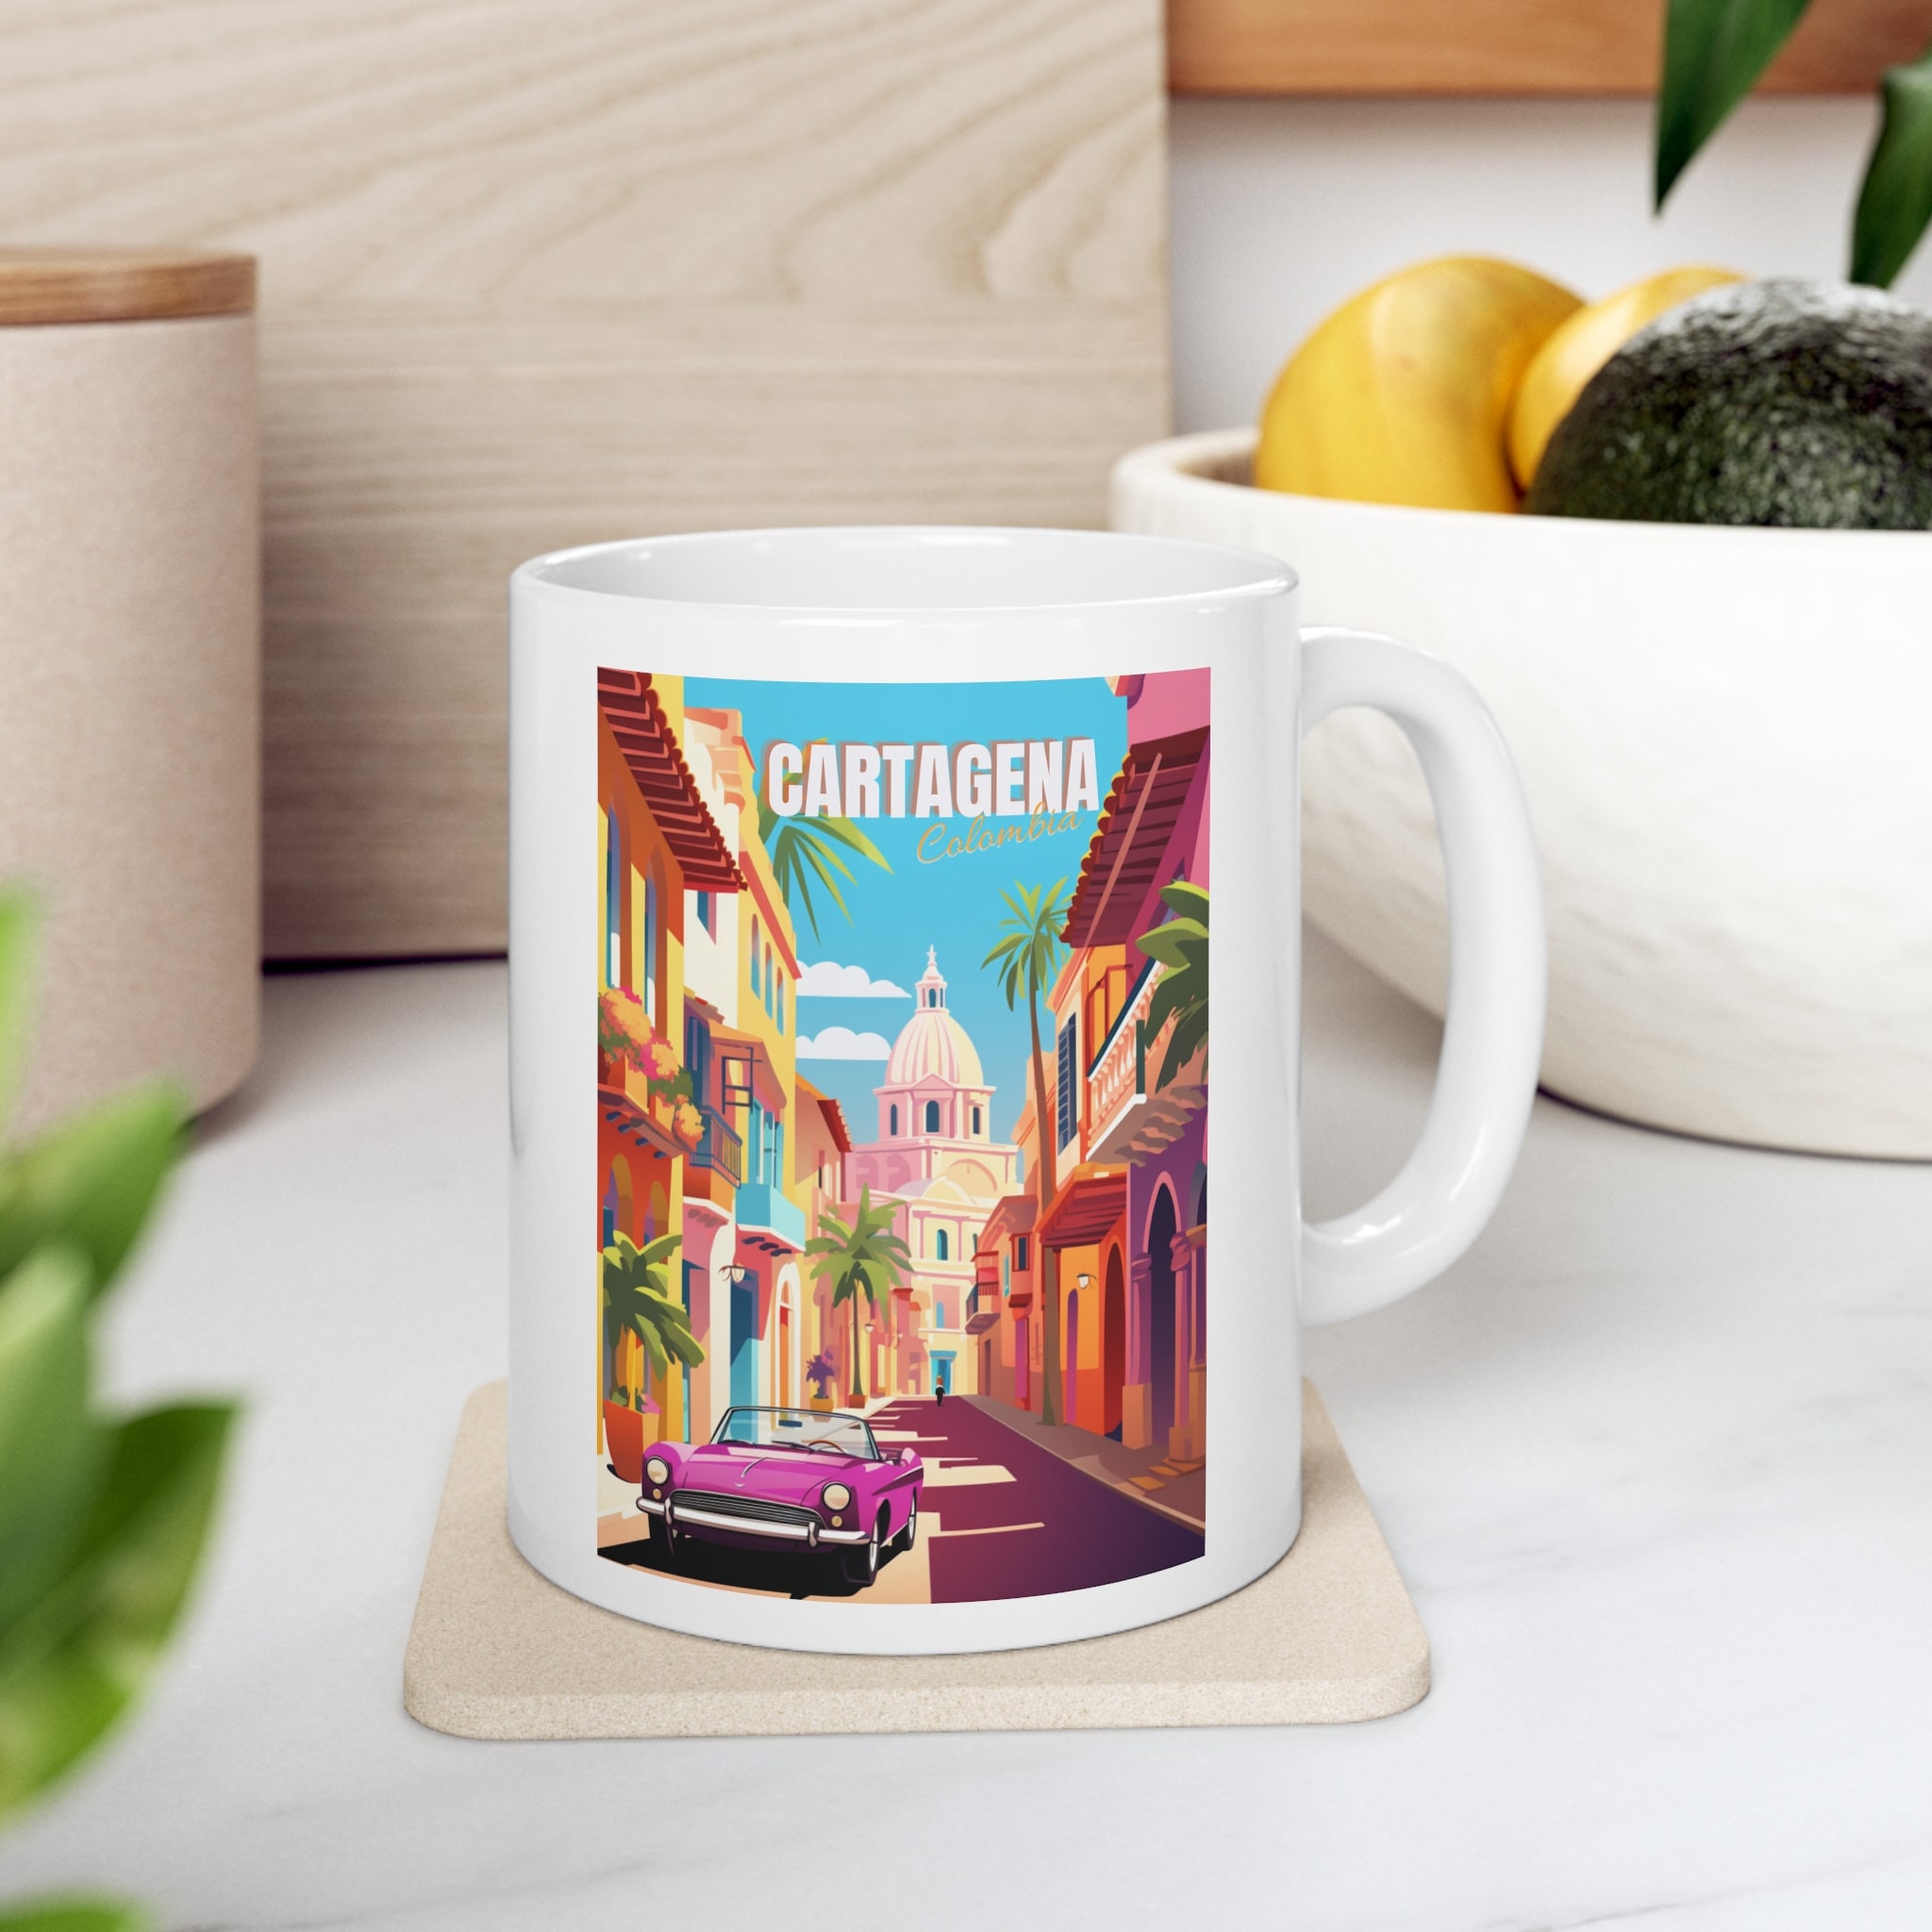 Sumatra 16 Oz Travel Mug, Insulated Travel Coffee Mug